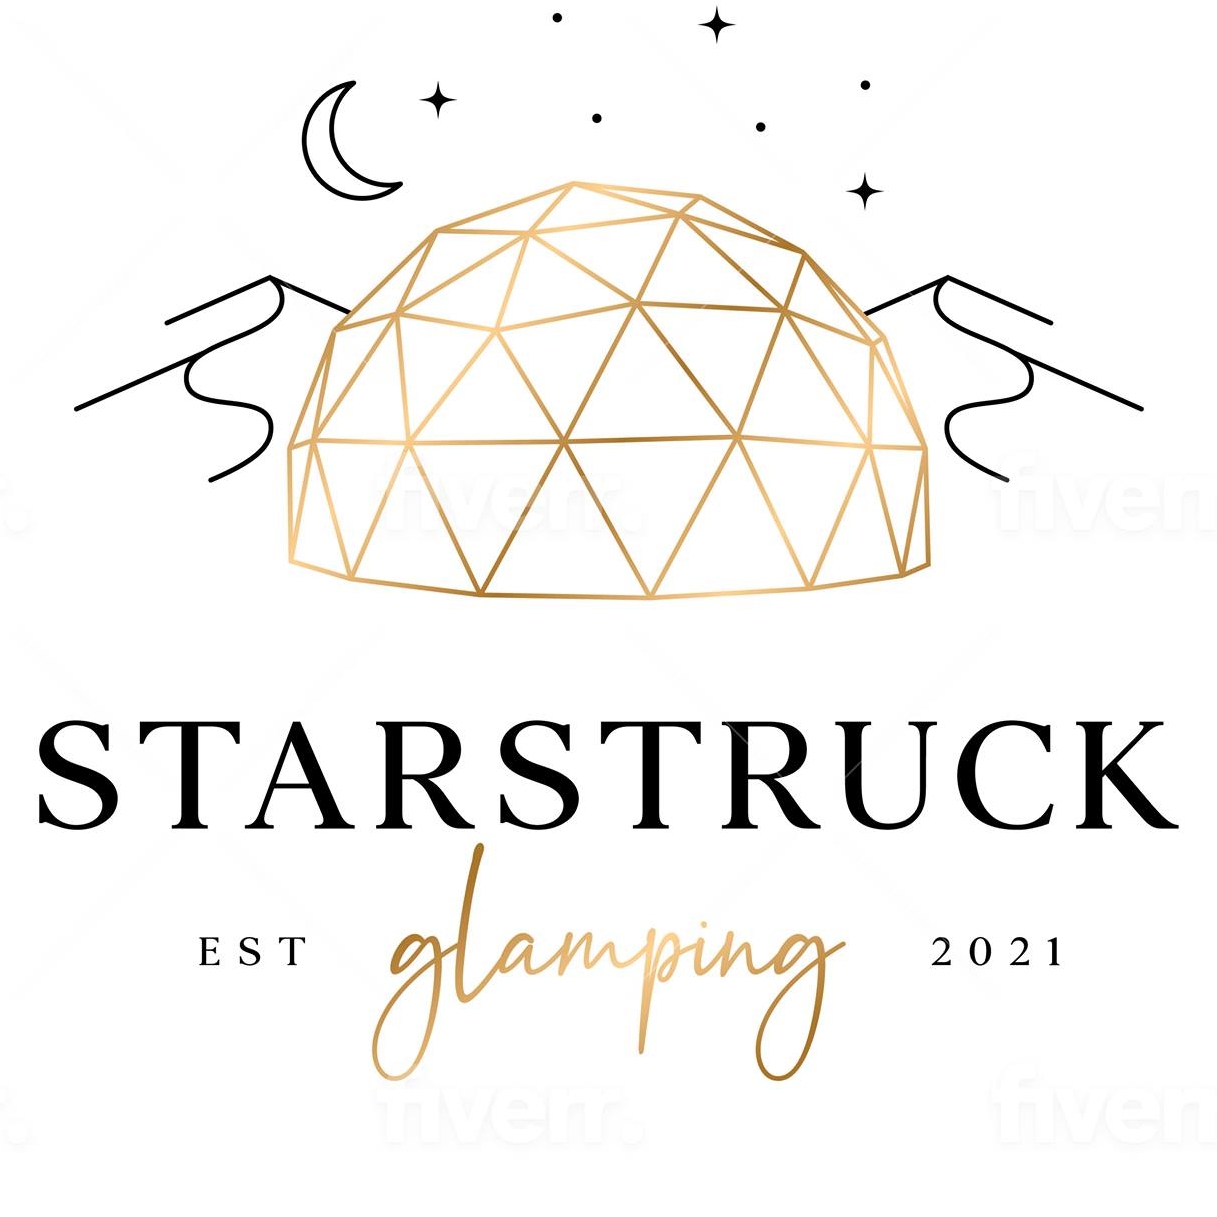 starstruck glamping 